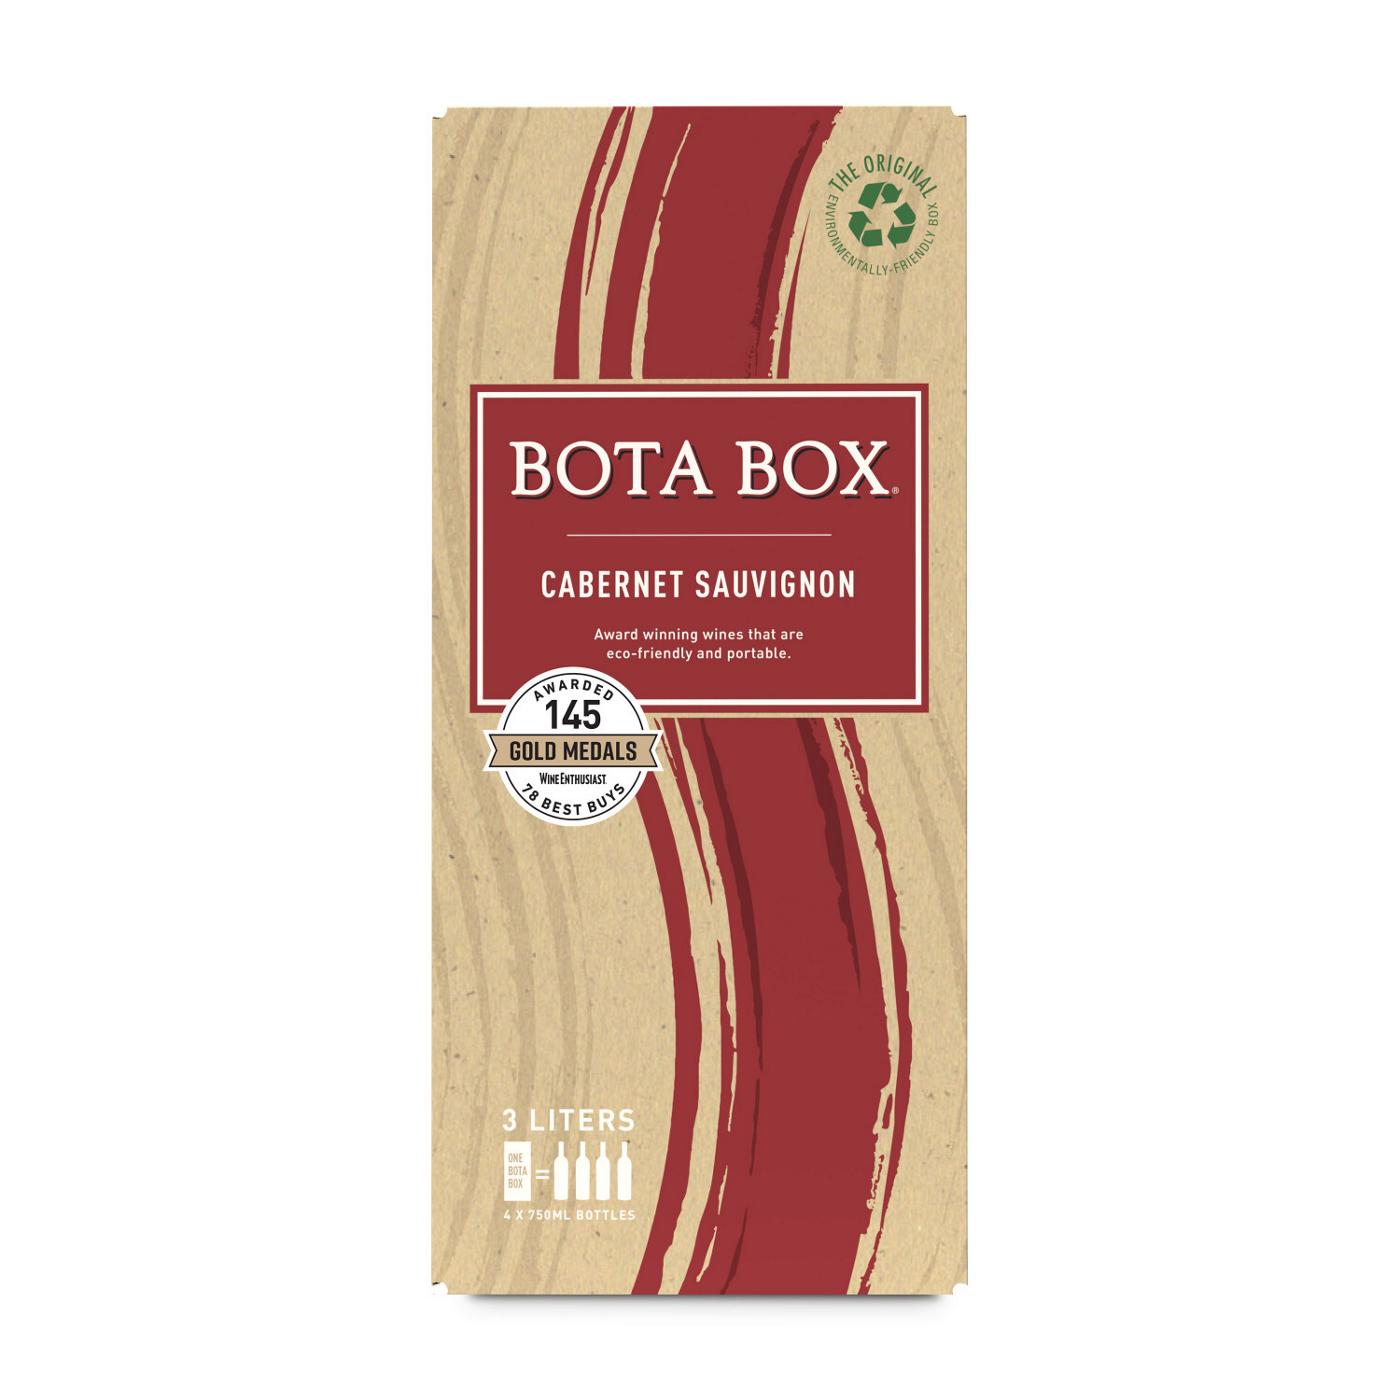 Bota Box Cabernet Sauvignon; image 1 of 5